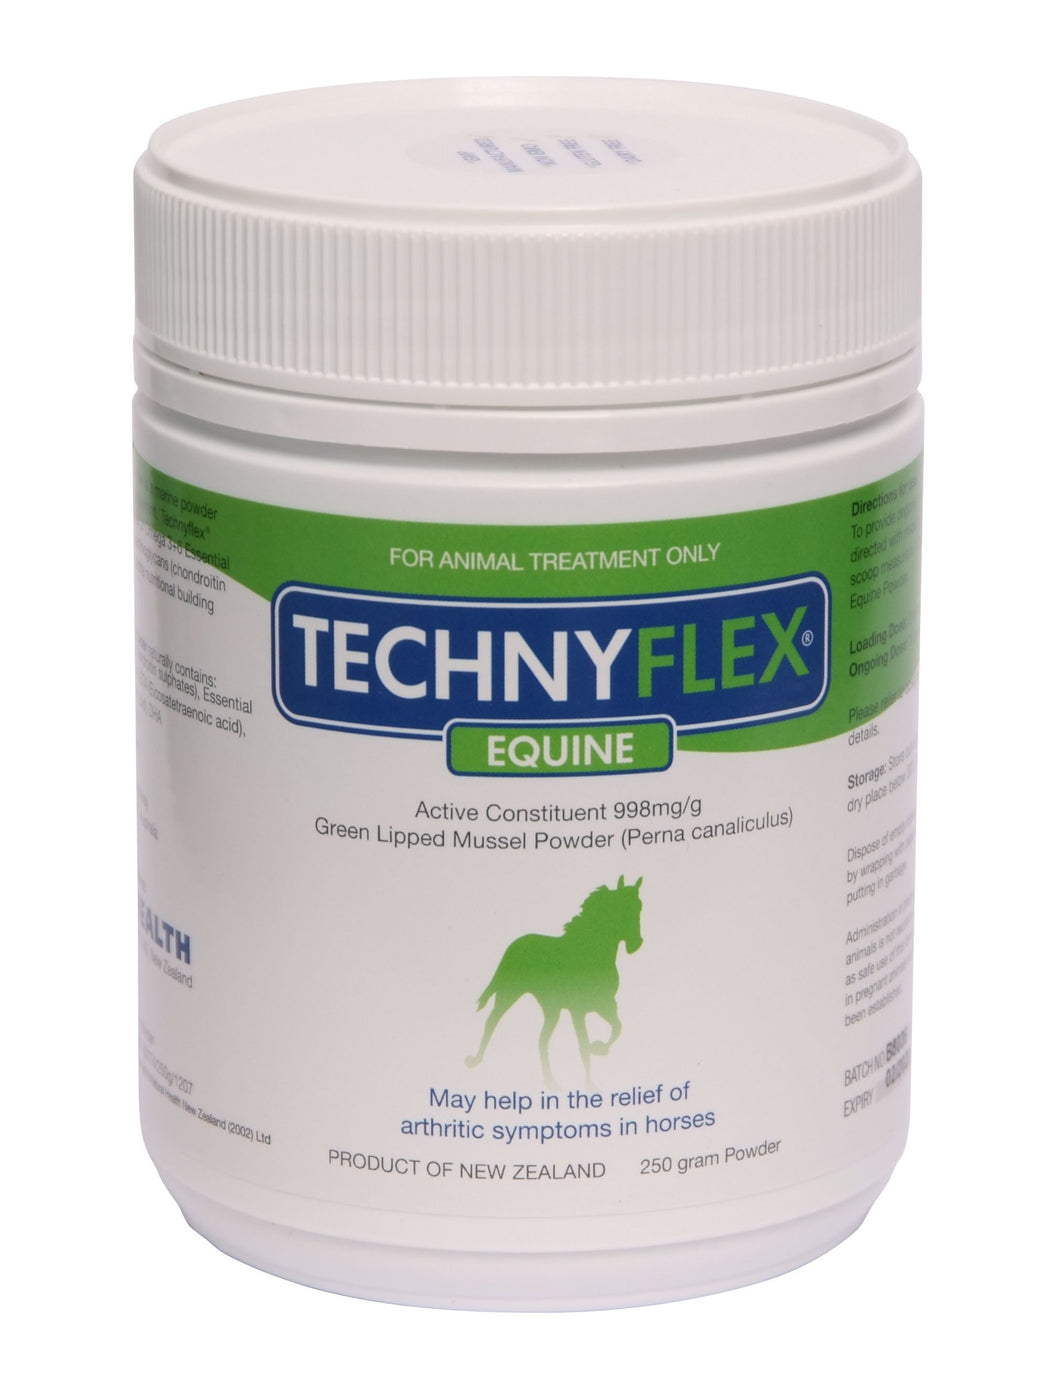 Technyflex® Equine 250g powder